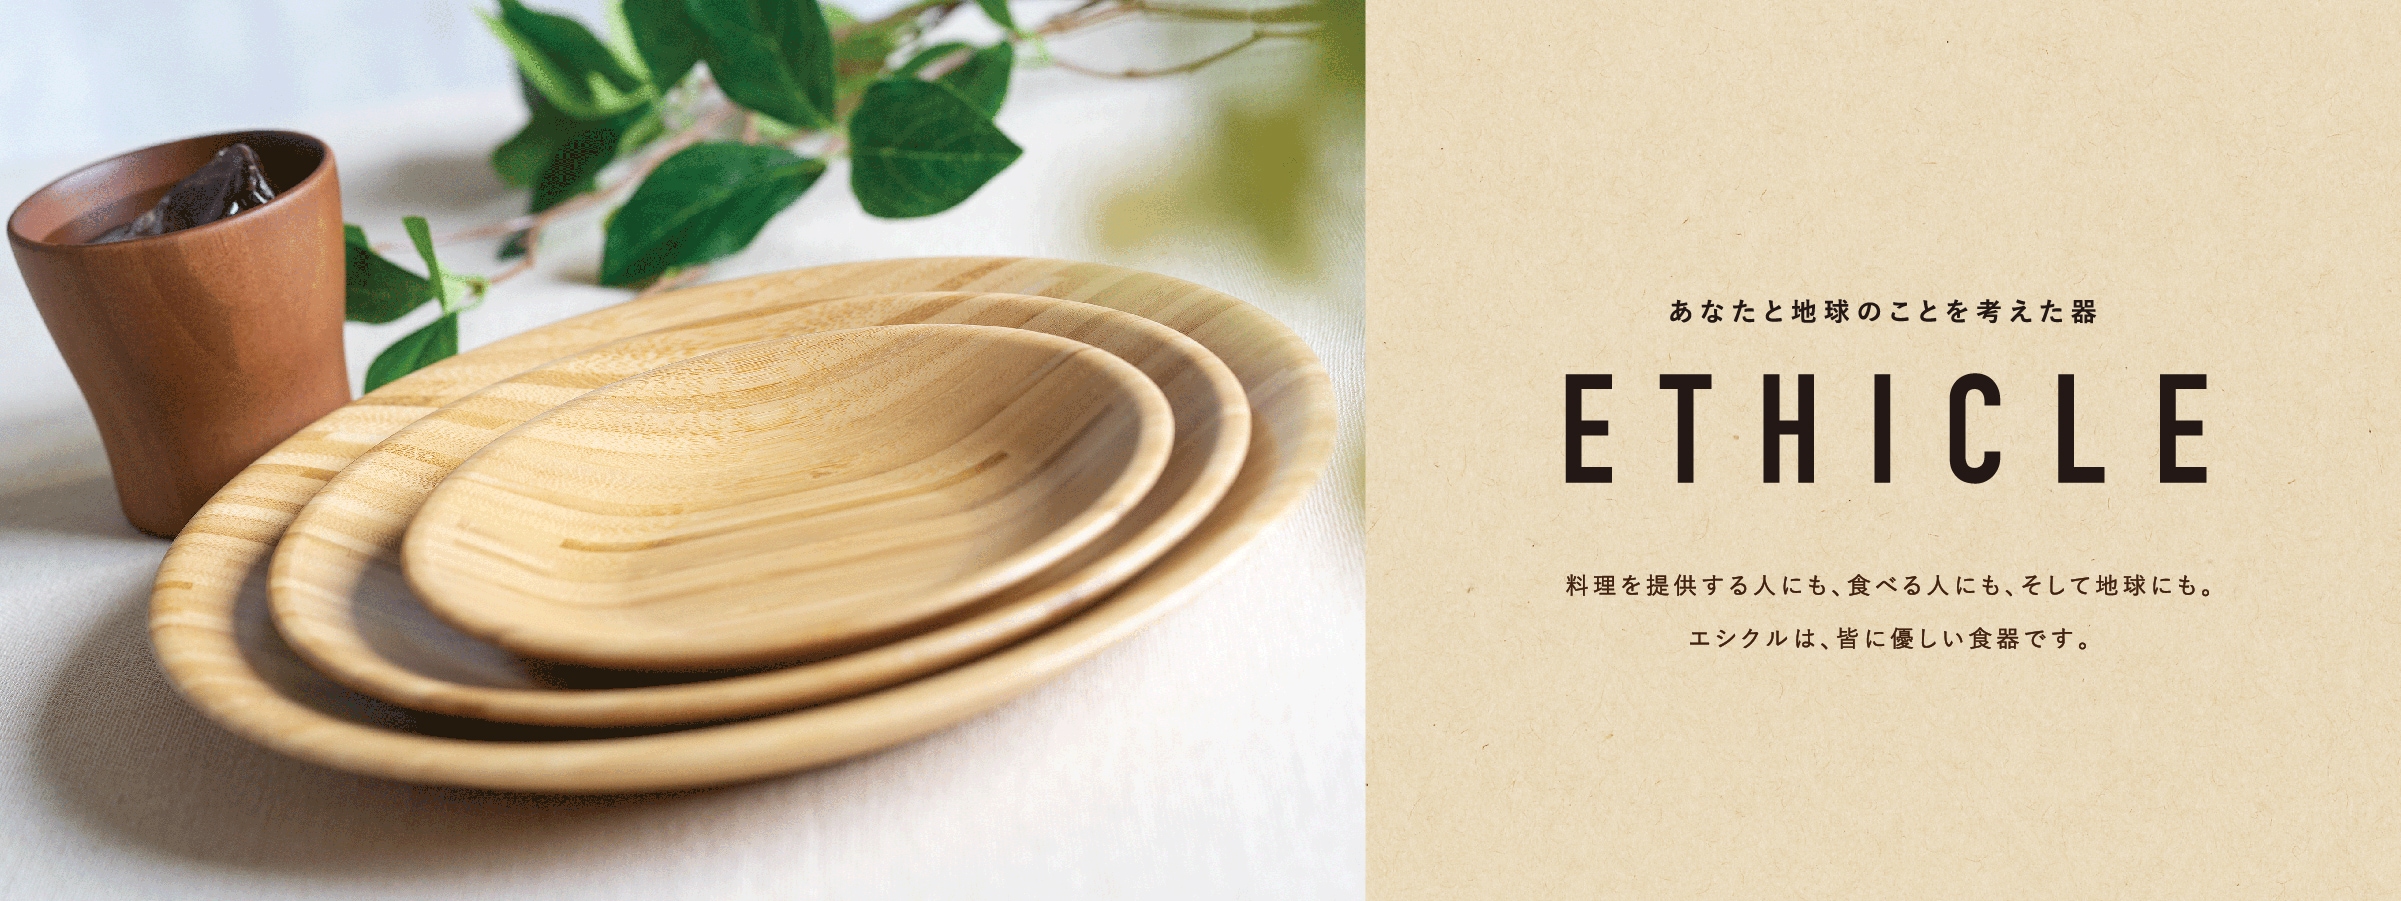 ETHICLE(竹製食器)
				